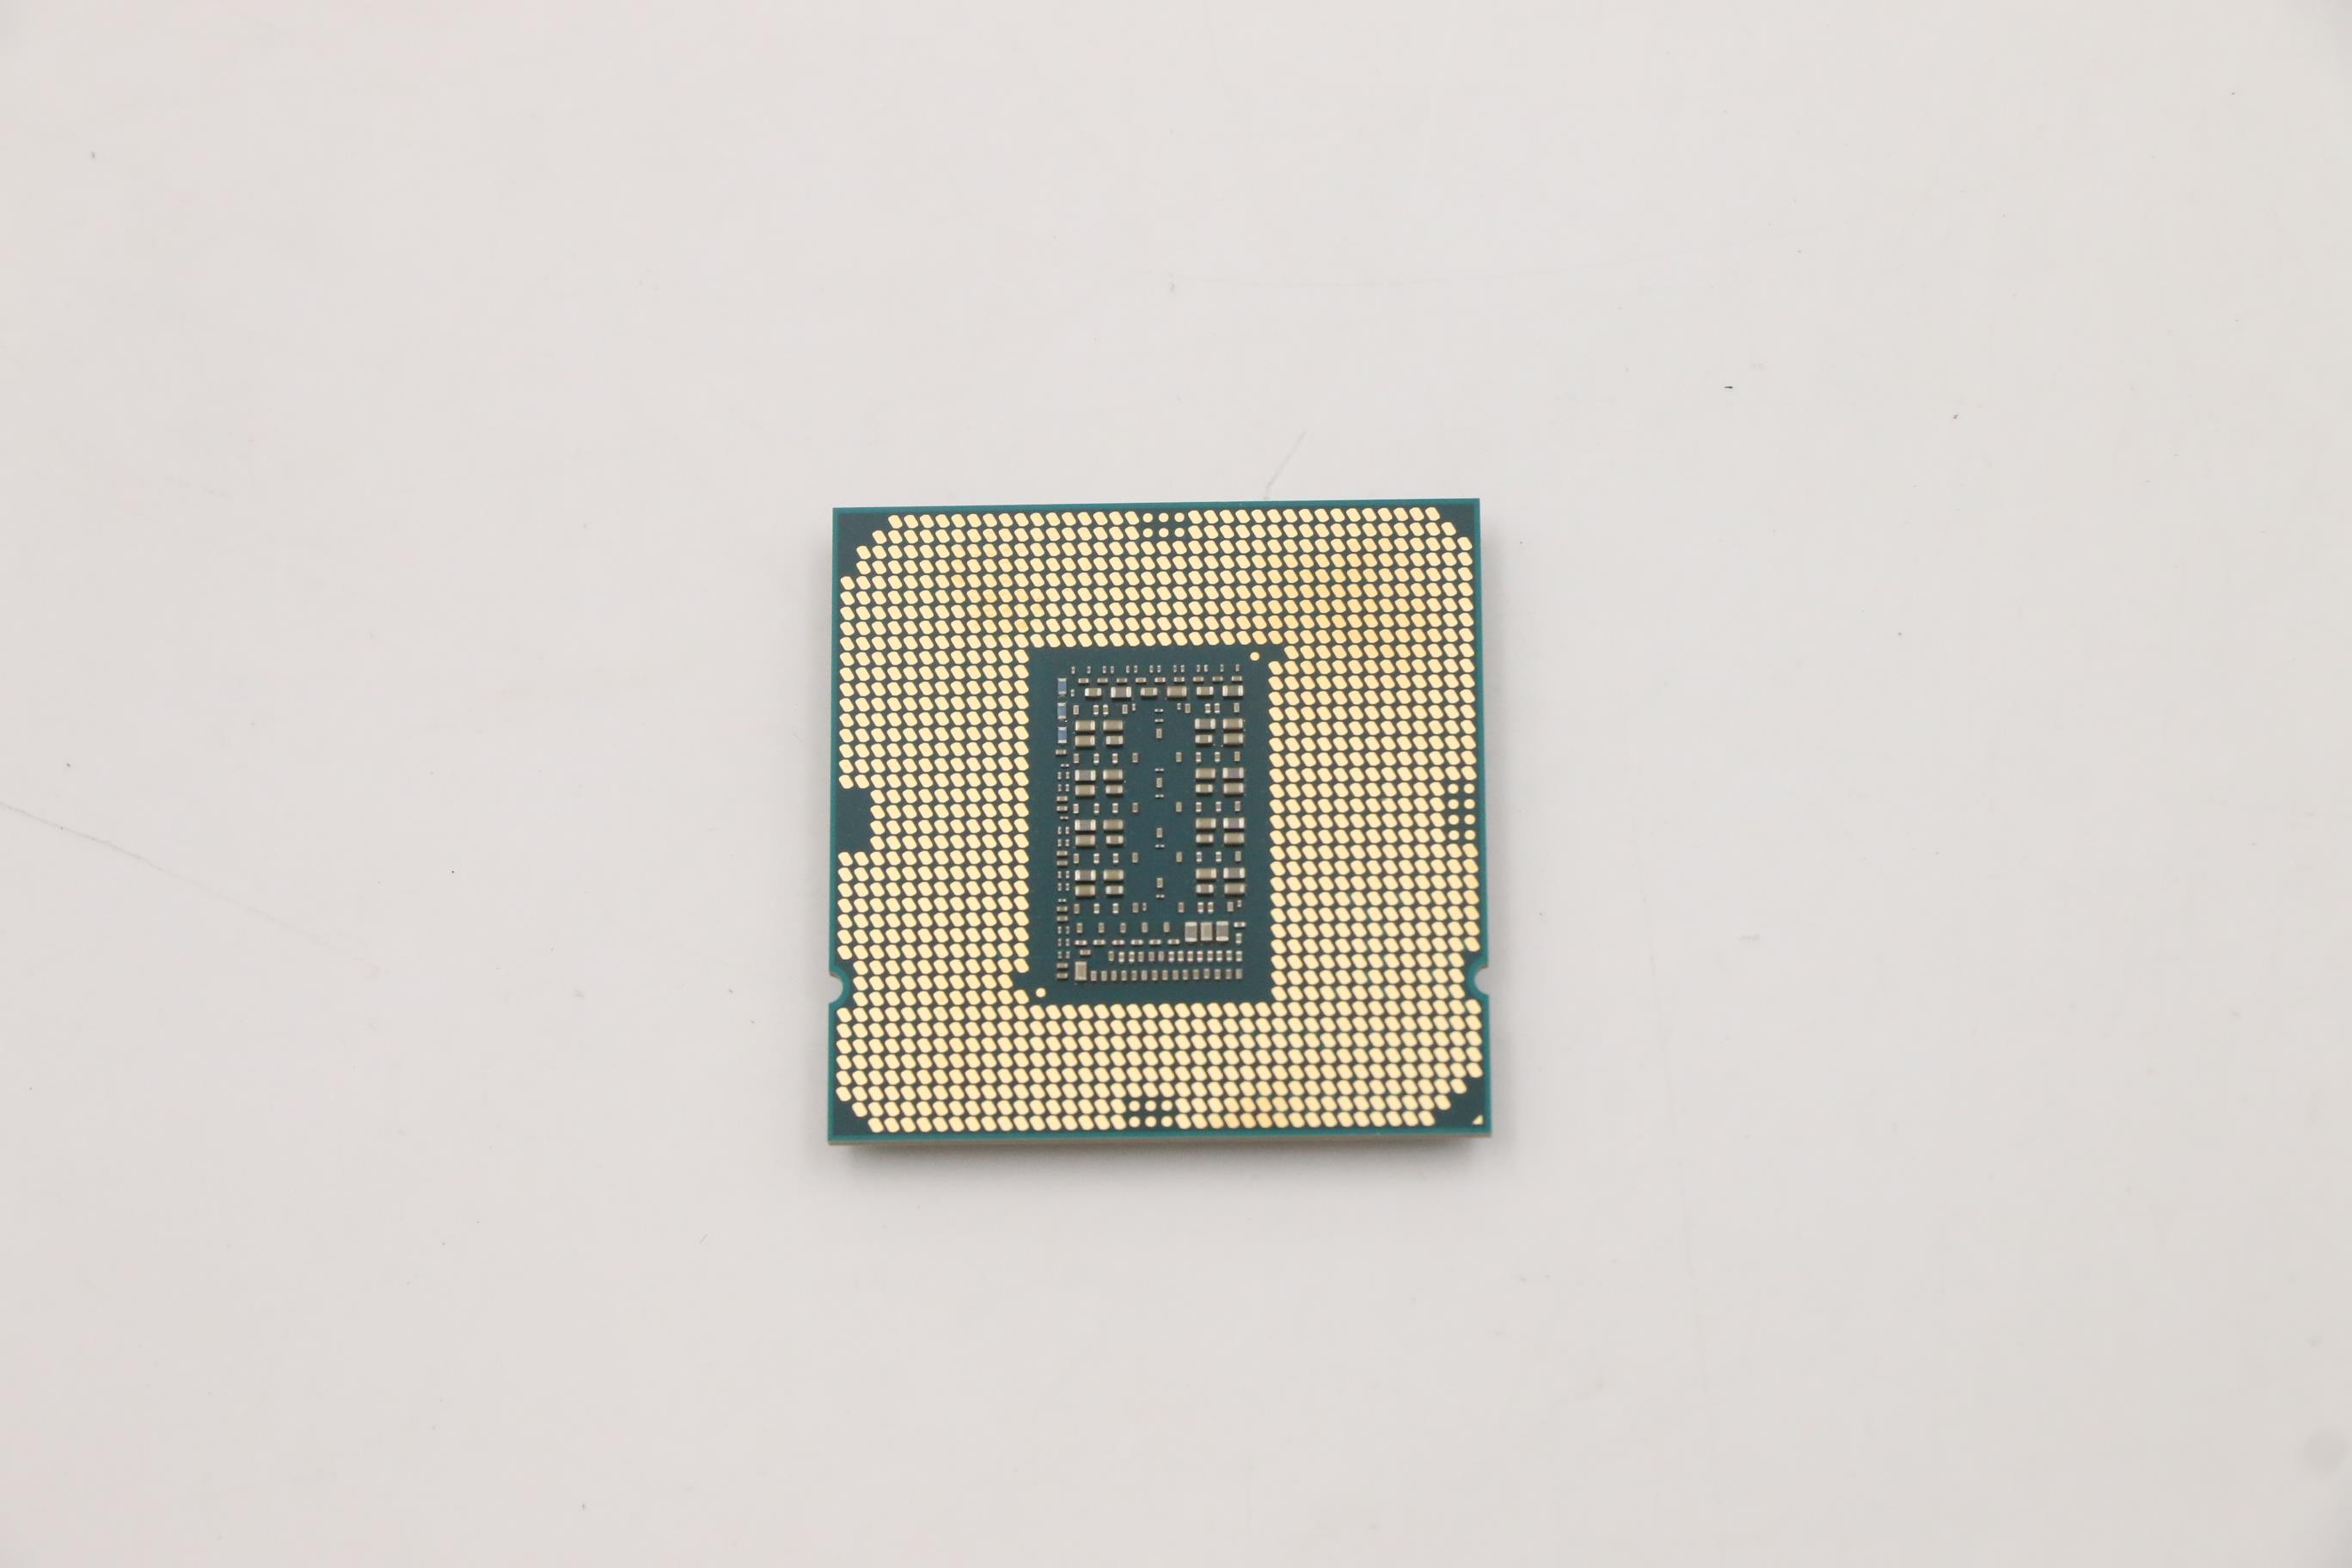 Lenovo Part  Original Lenovo Intel i7-11700T 1.4GHz/8C/16M 35W DDR4 3200